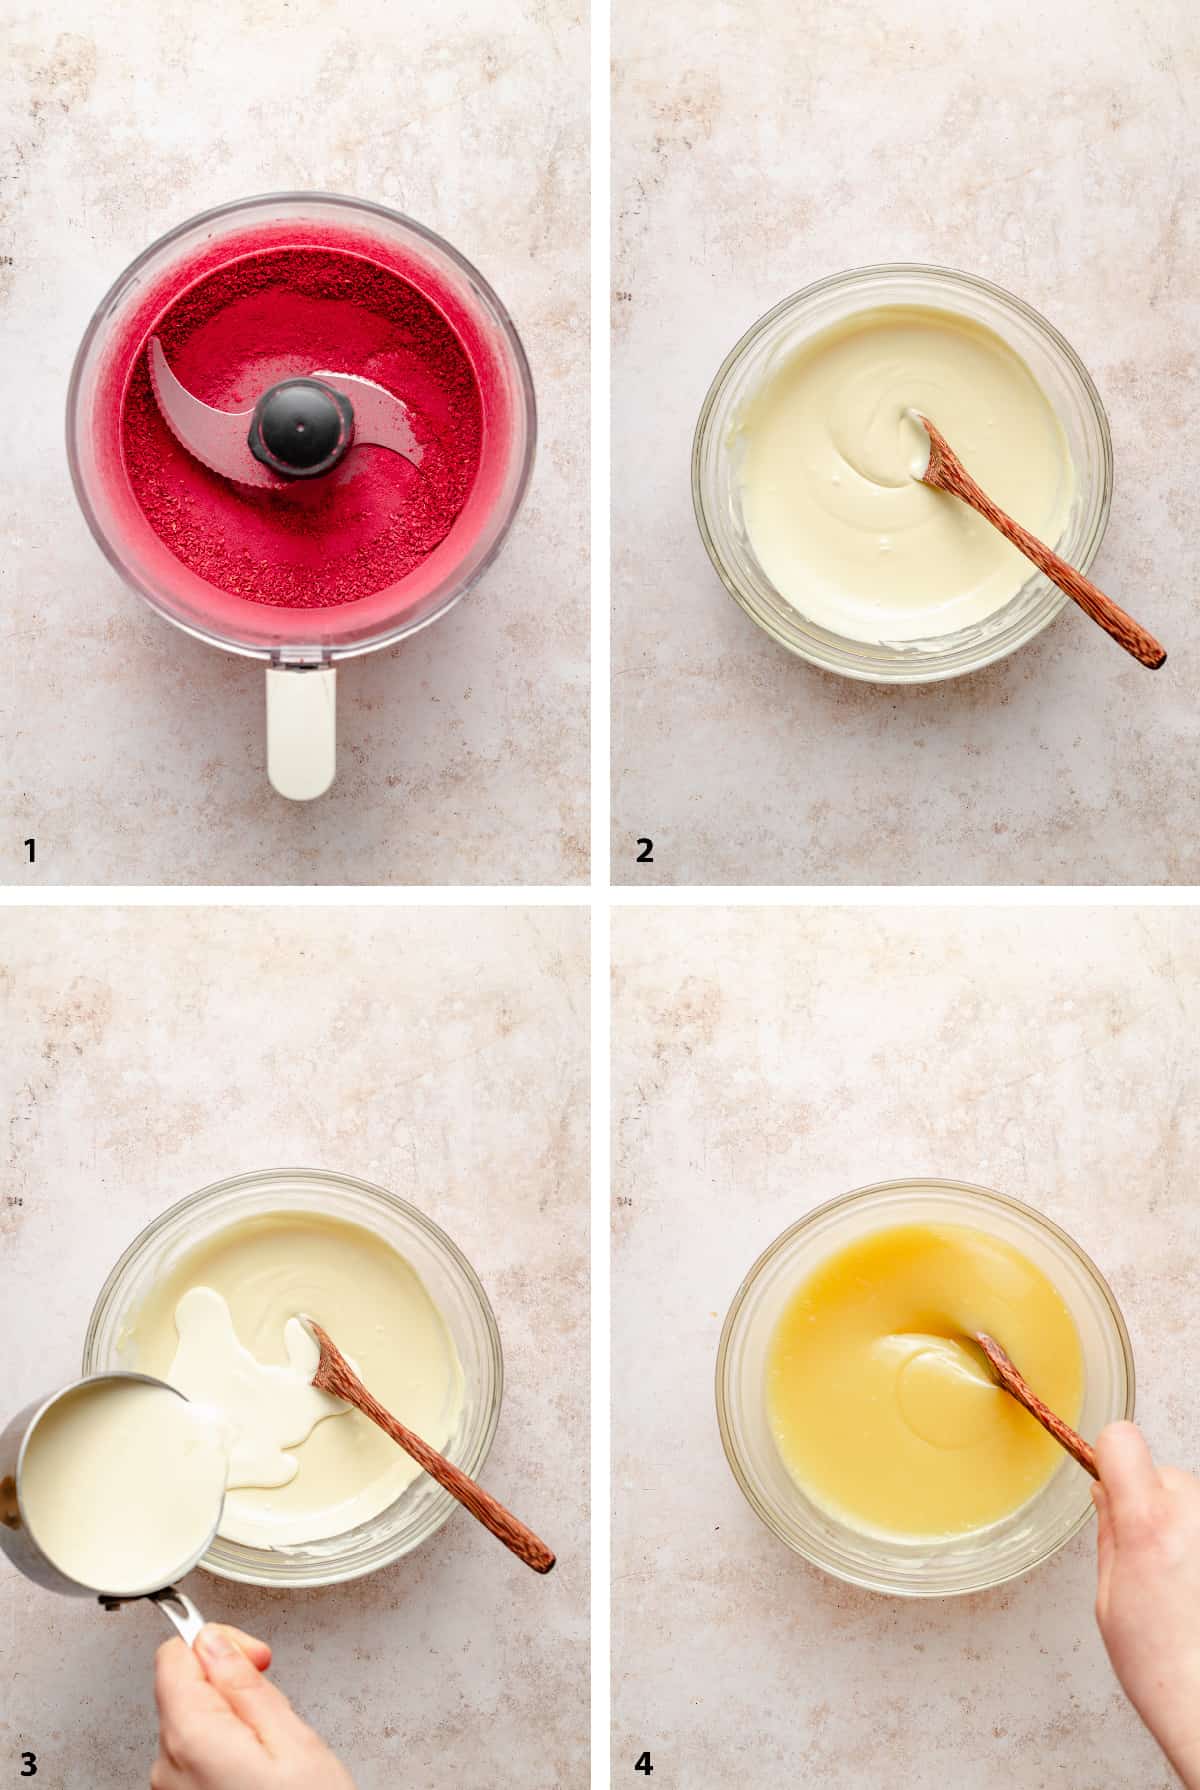 Process steps of making raspberry powder and white chocolate ganache.